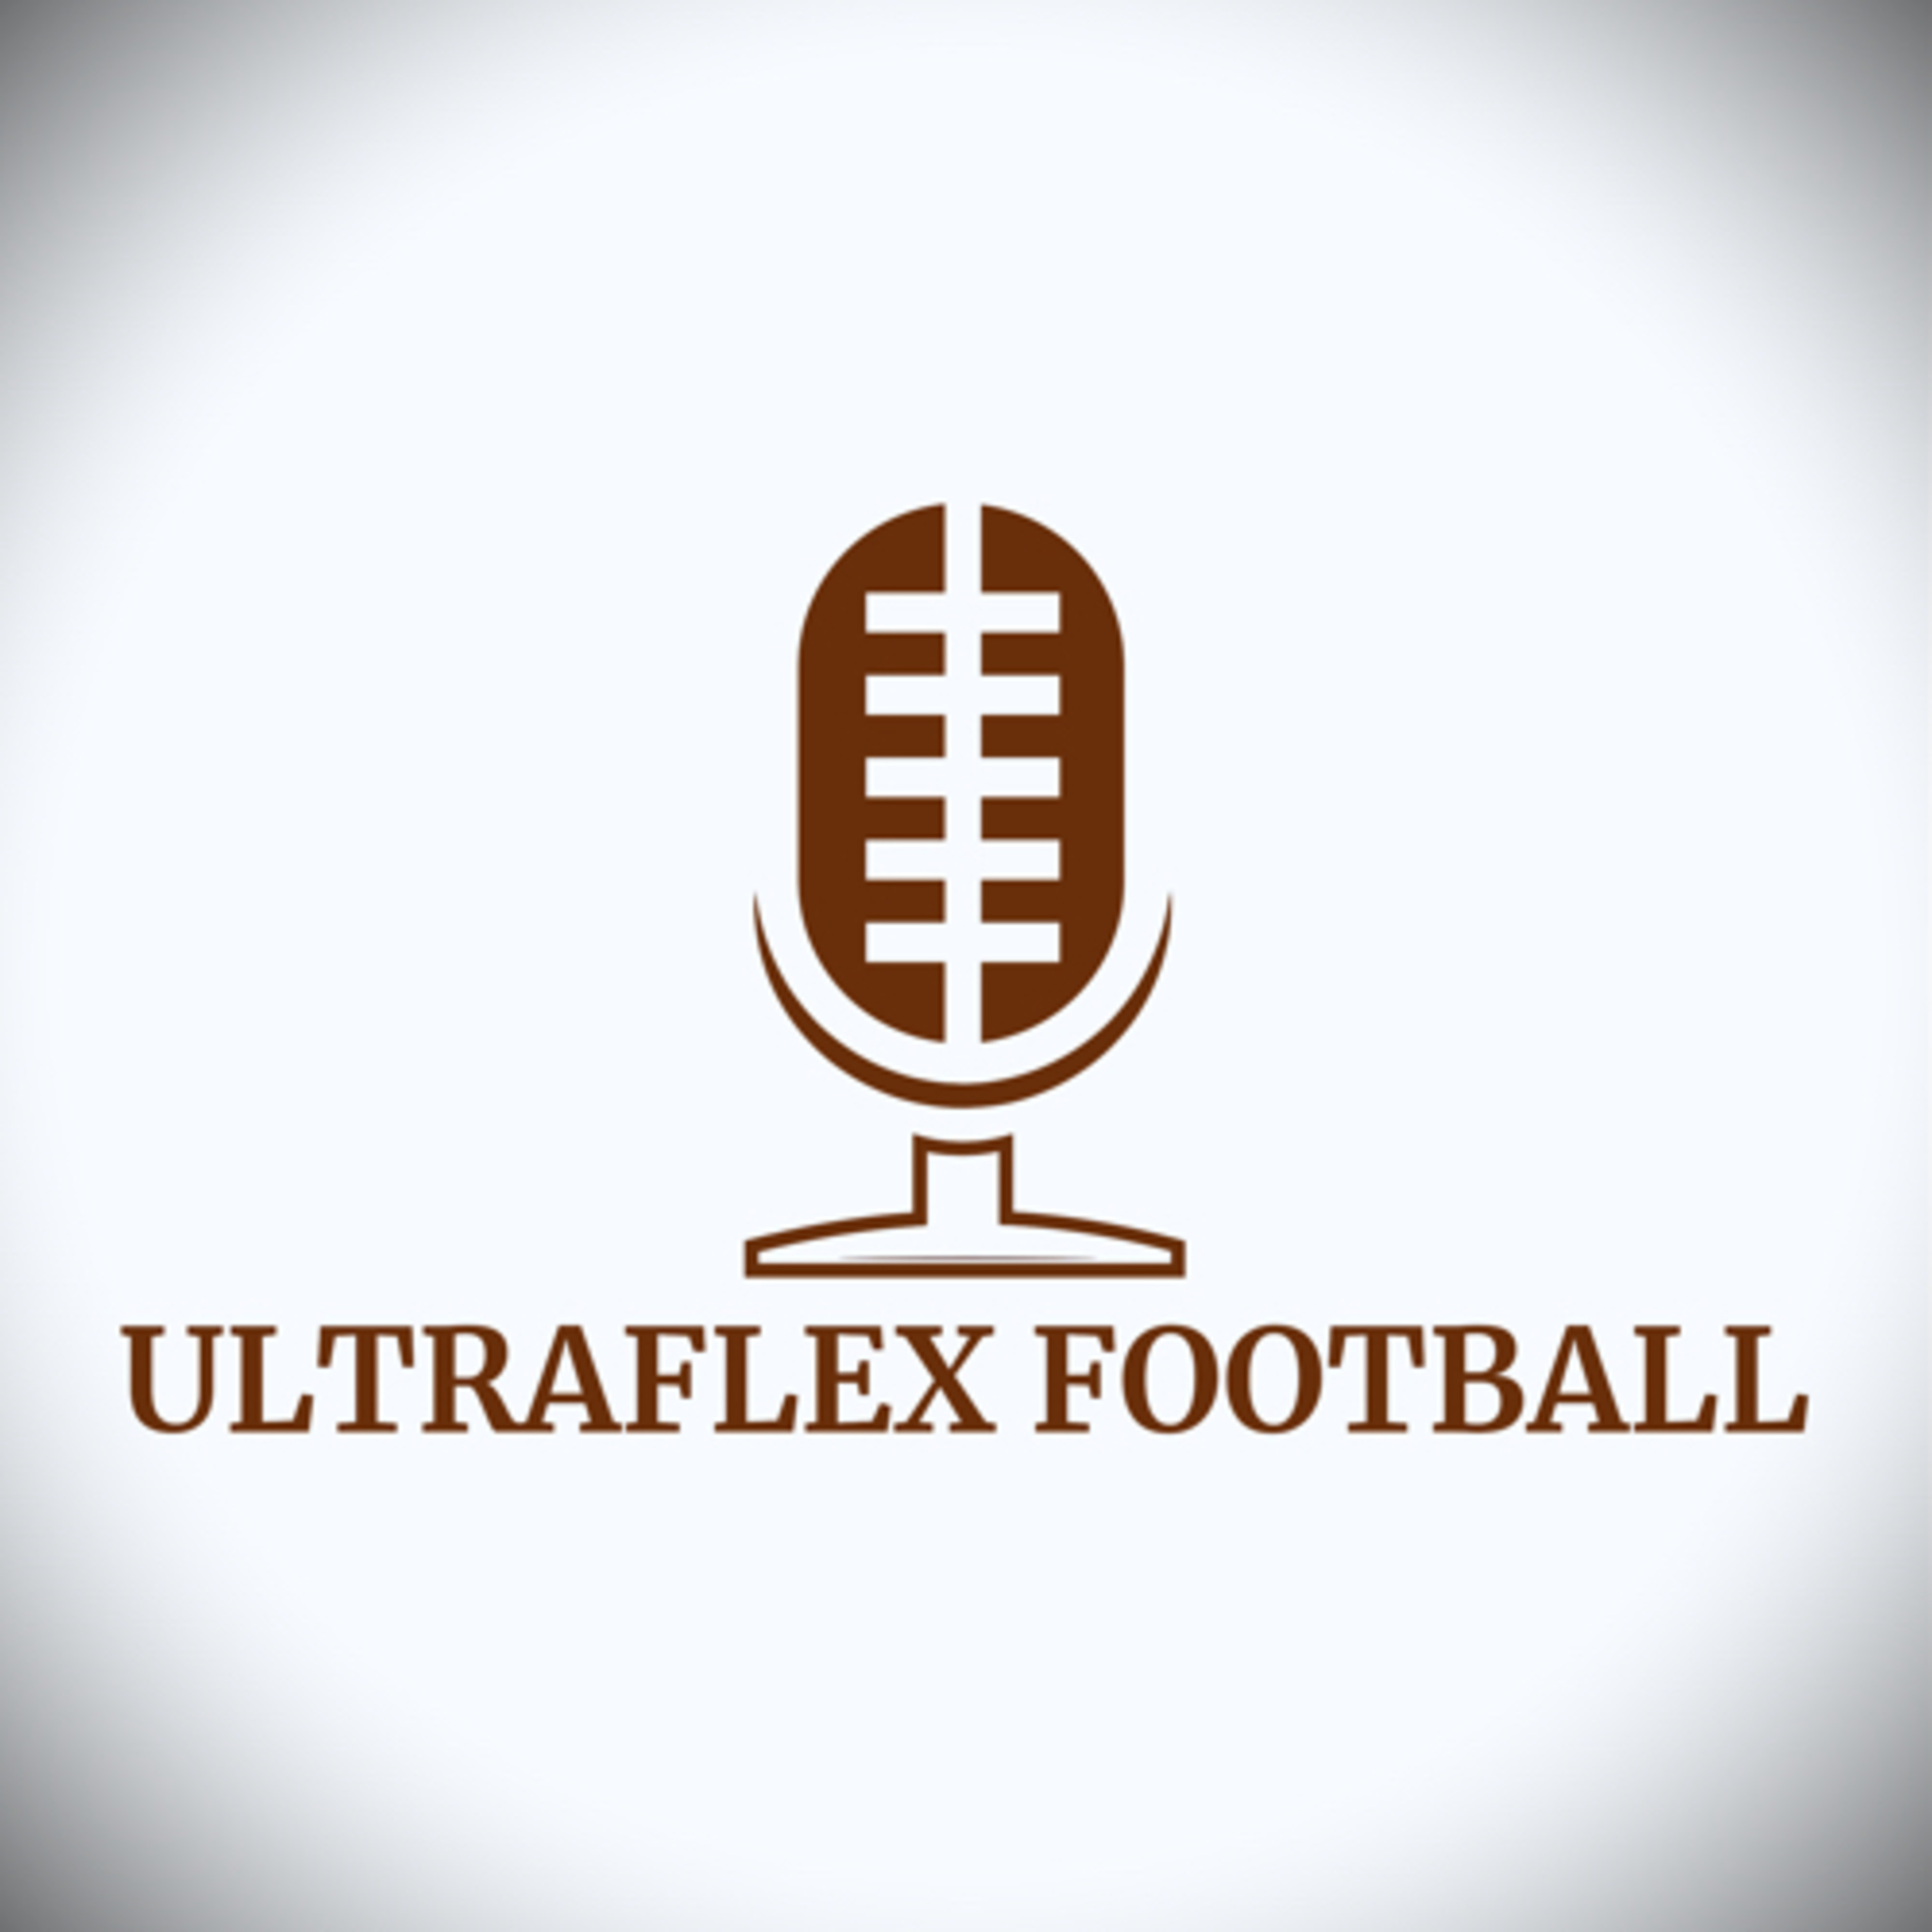 Fresh update on "nfc" discussed on Ultraflex Football